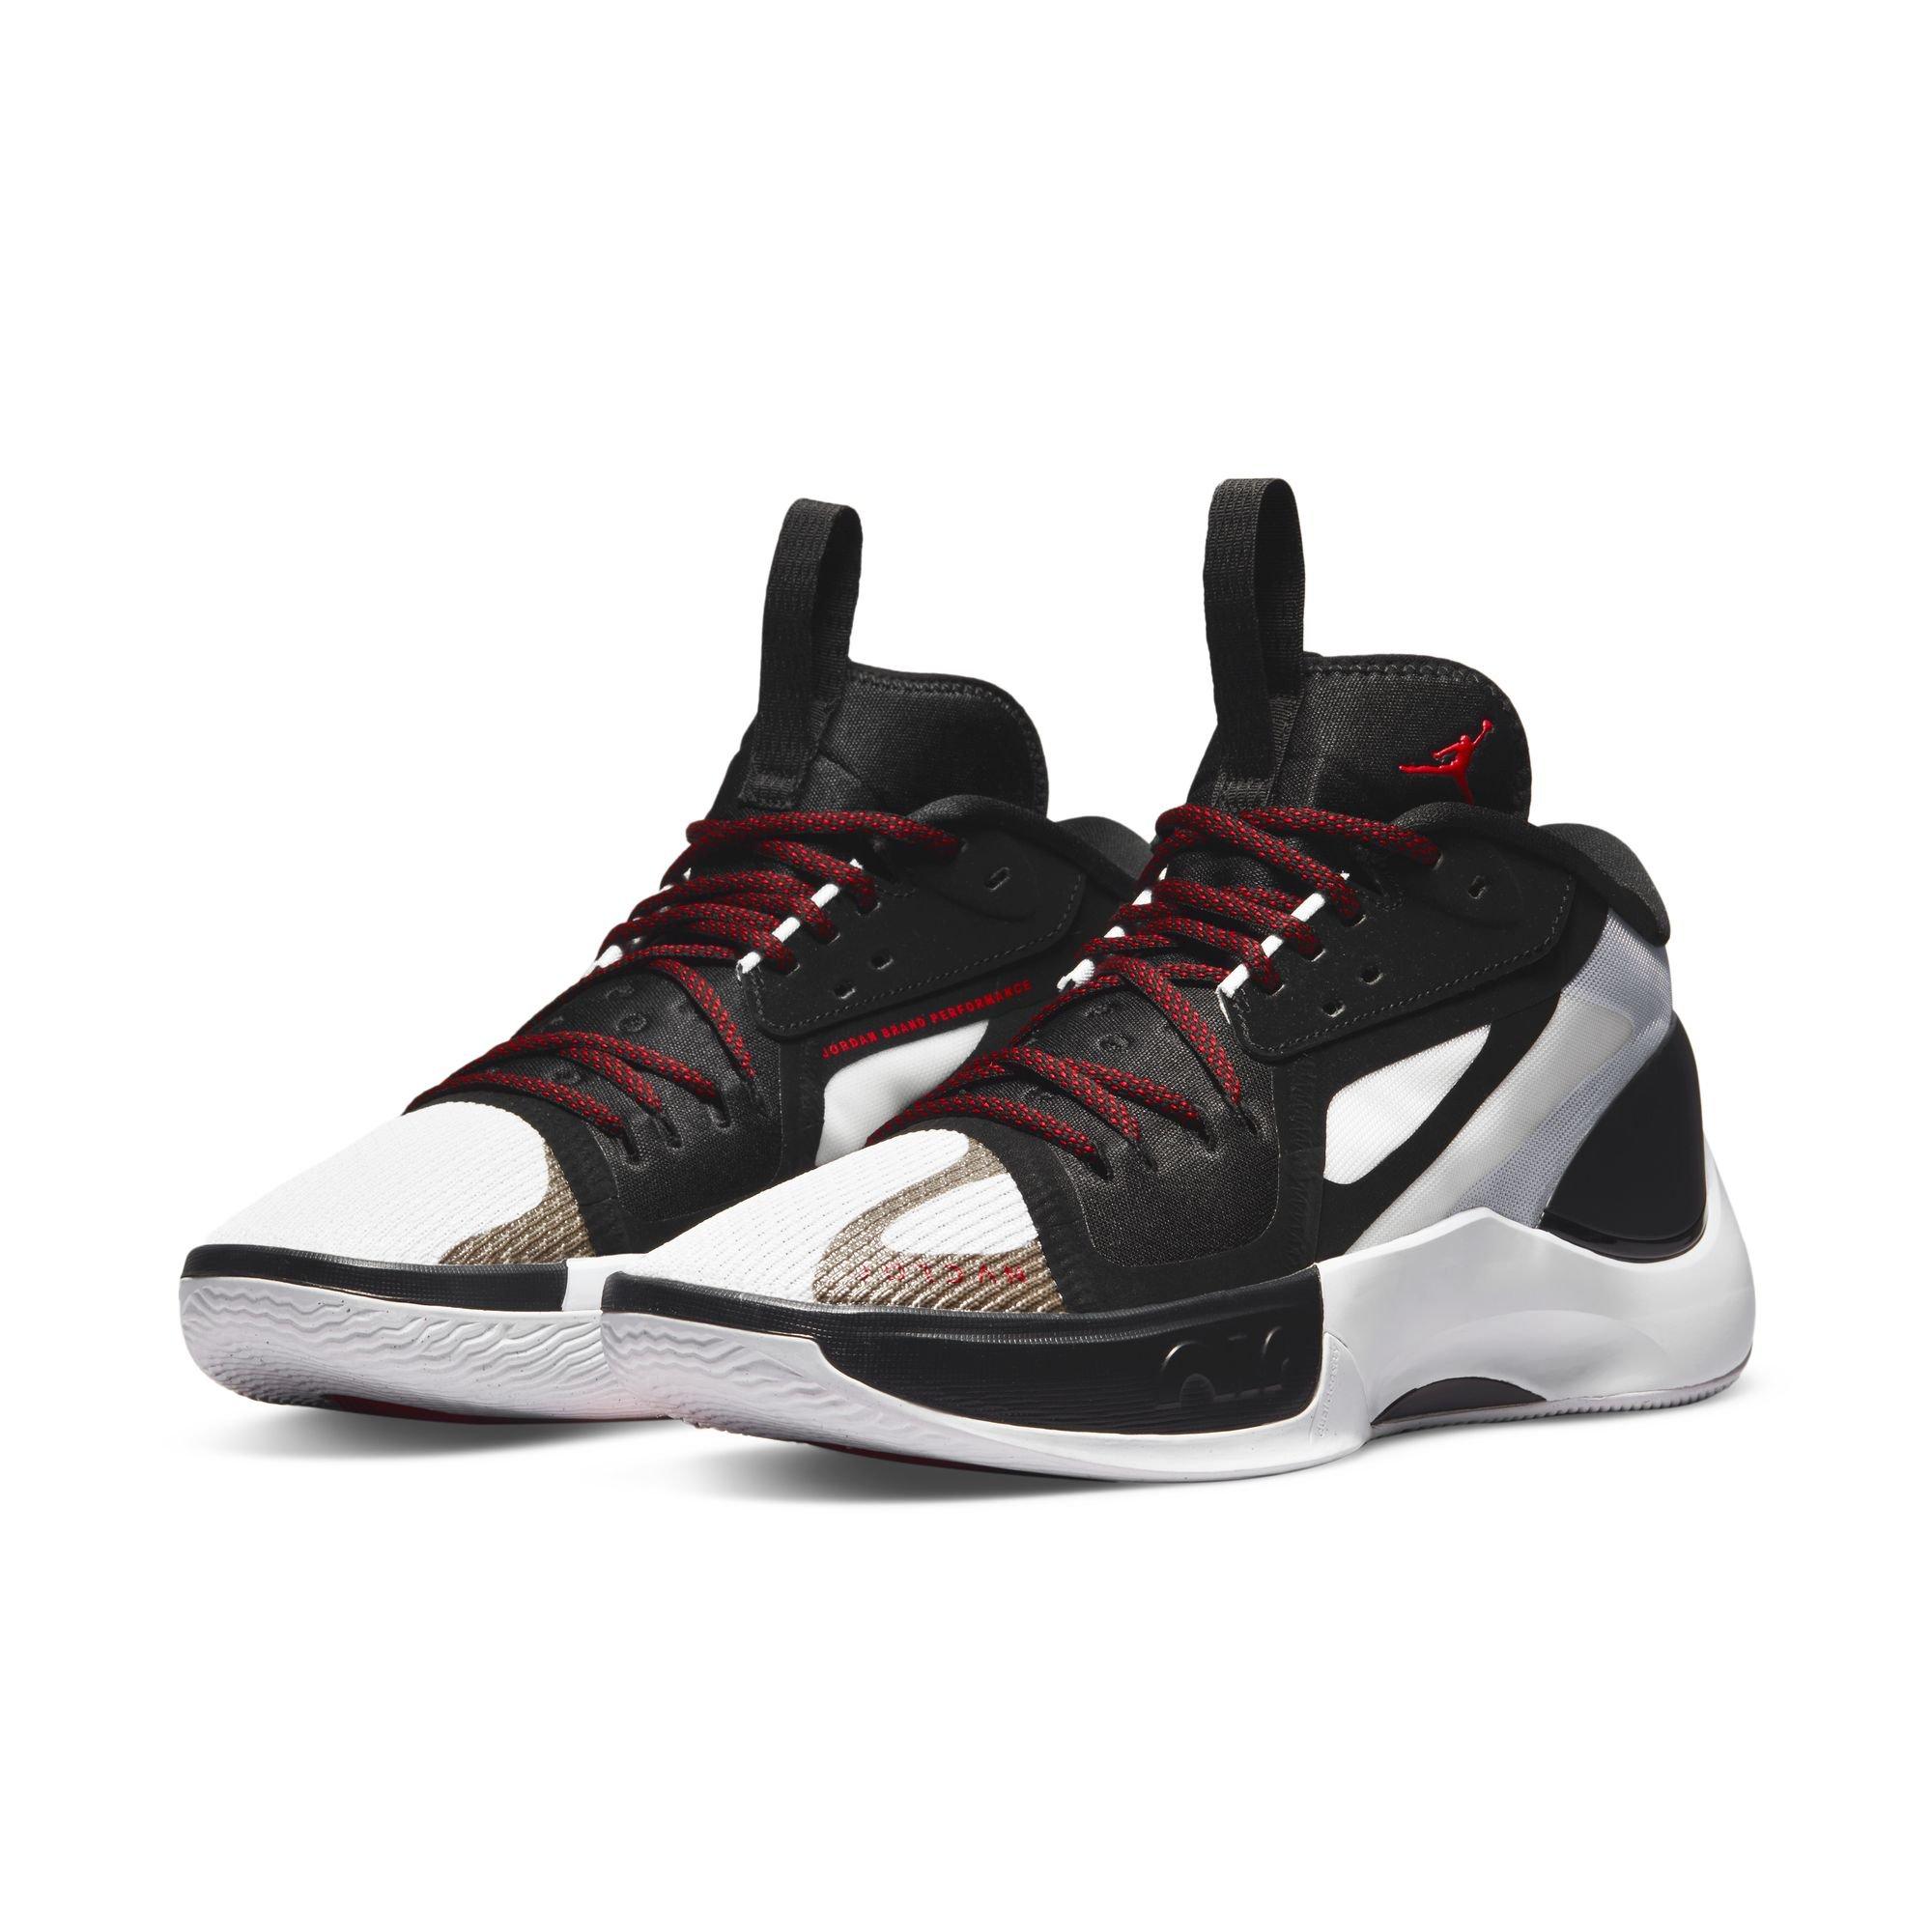 Jordan Zoom Separate Bred Men's Basketball Shoes, Black/Red/White, Size: 8.5